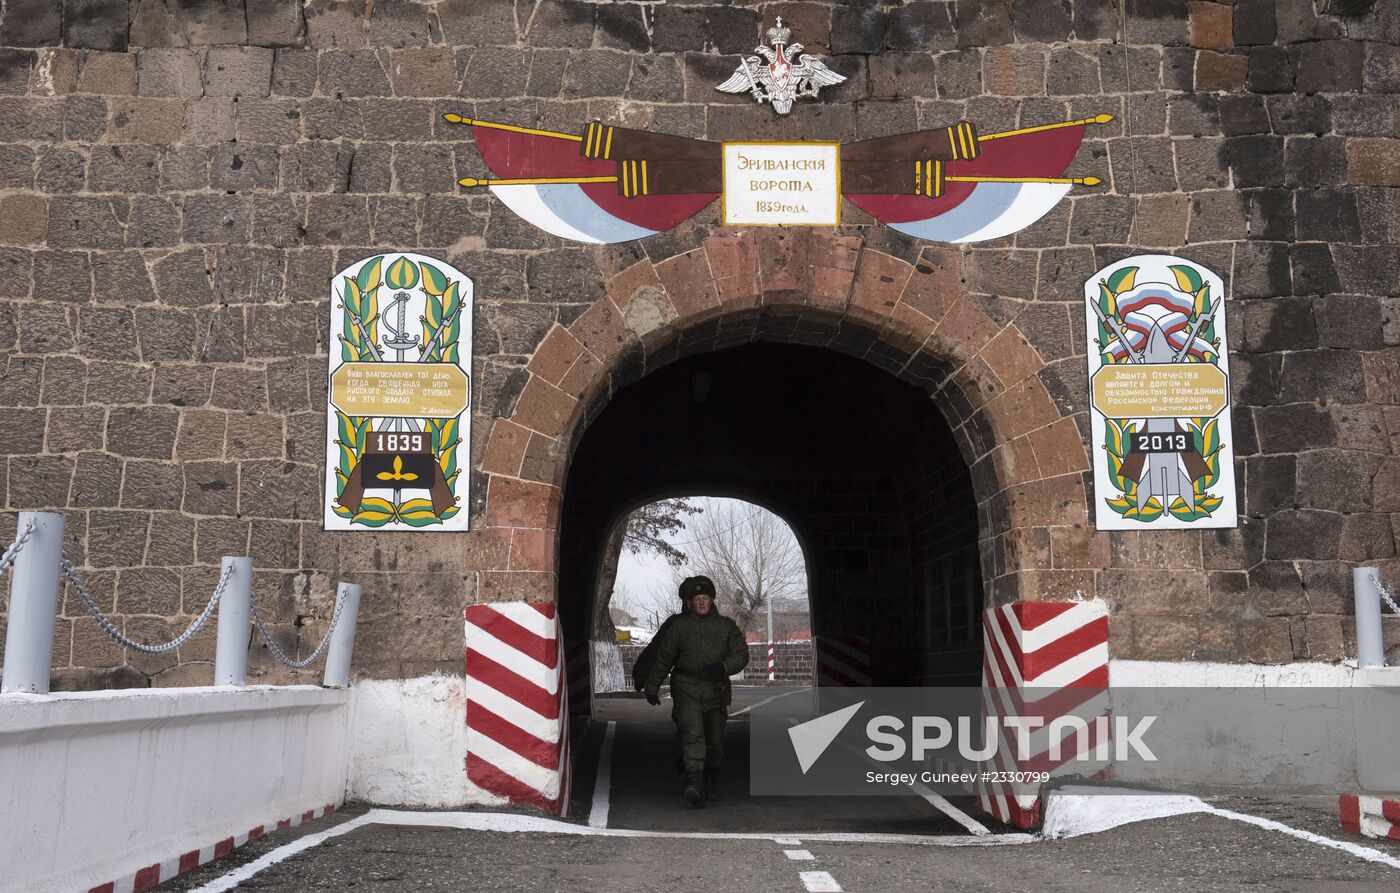 102nd Russian military base in Armenia